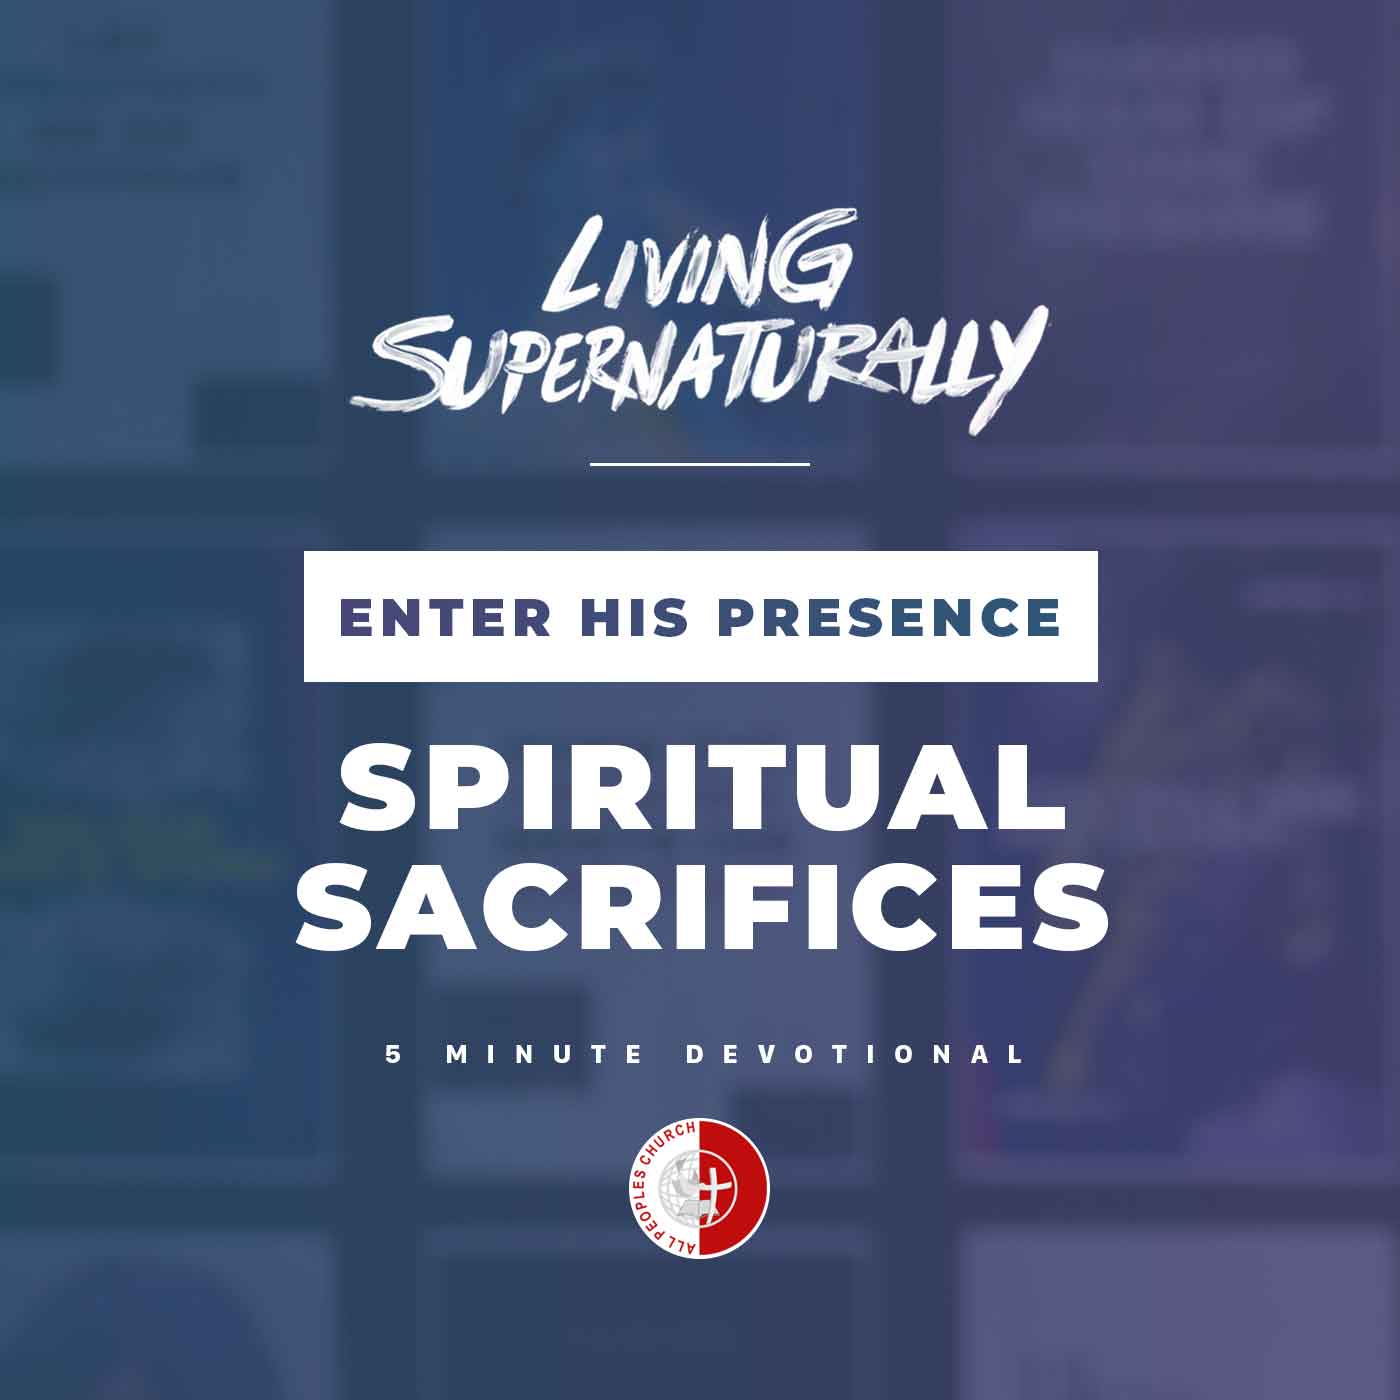 What are spiritual sacrifices?